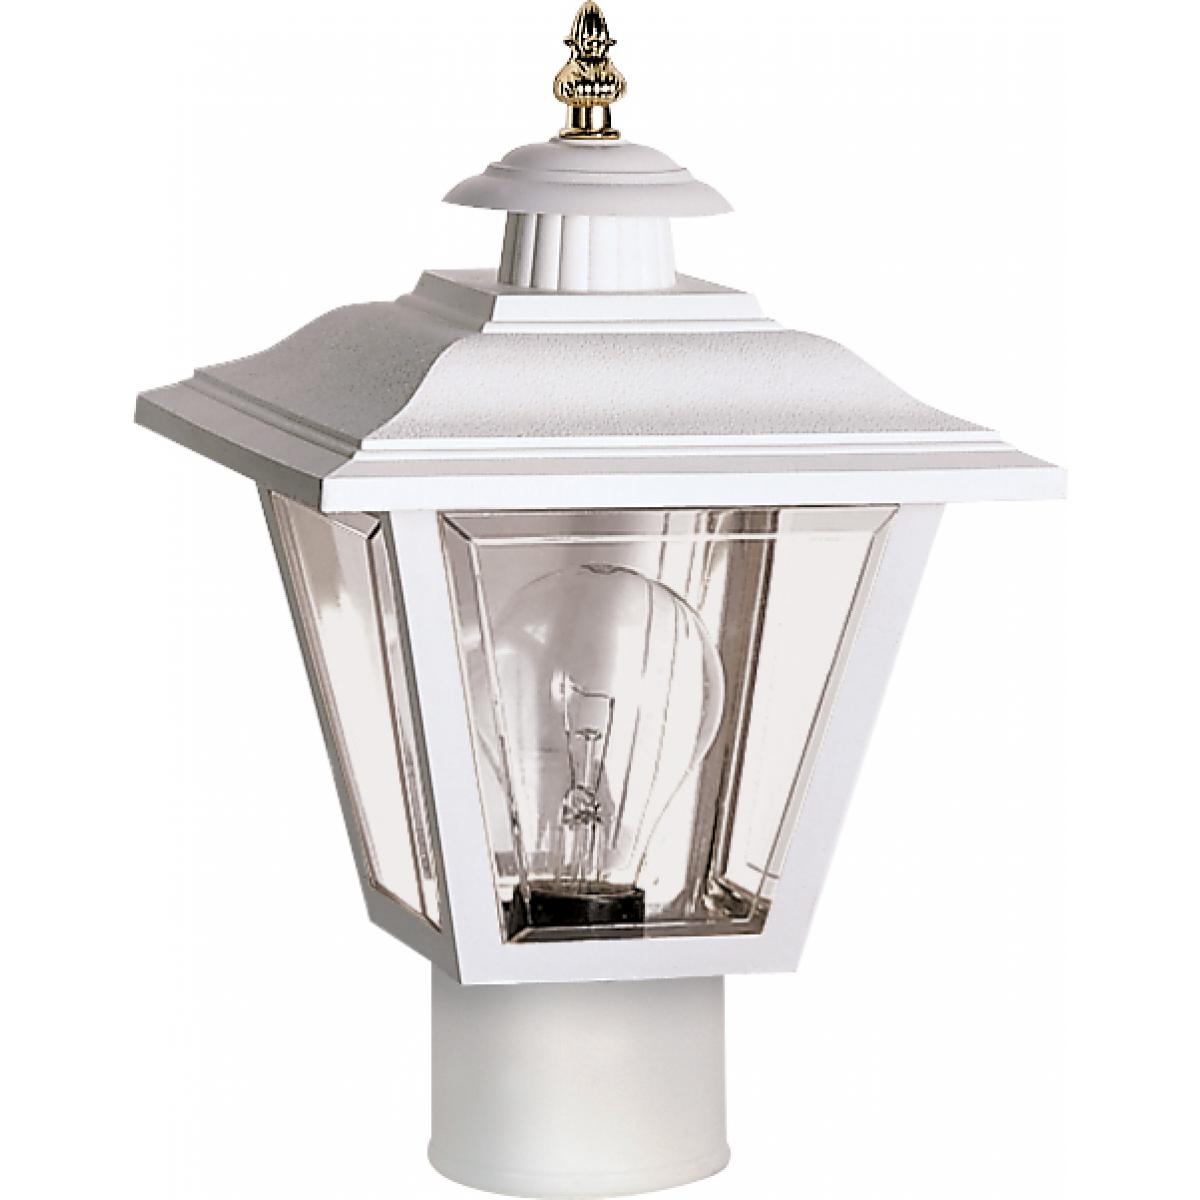 Satco 77-899 1 Light - 13" Post Lantern Coach Lantern with Brass Finial Acrylic Panels - White Finish